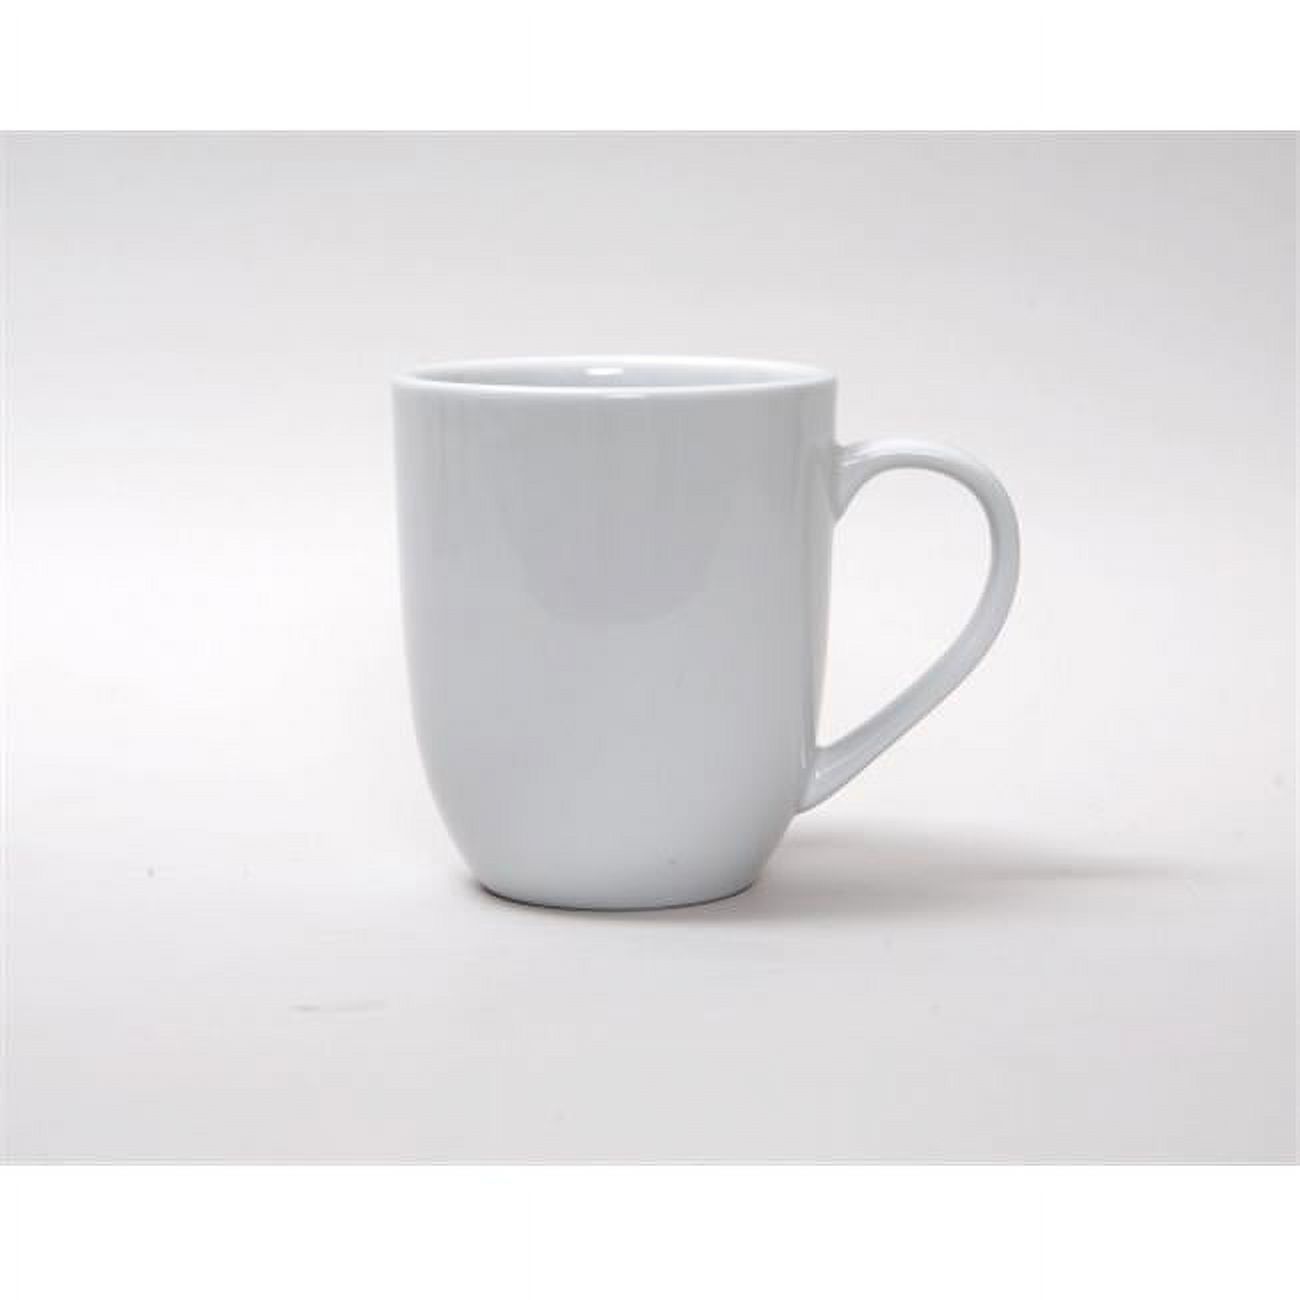 Tuxton China BPM-160A 3.75 in. Milano Mug 16 oz. - Porcelain White  - 2 Dozen - image 1 of 1